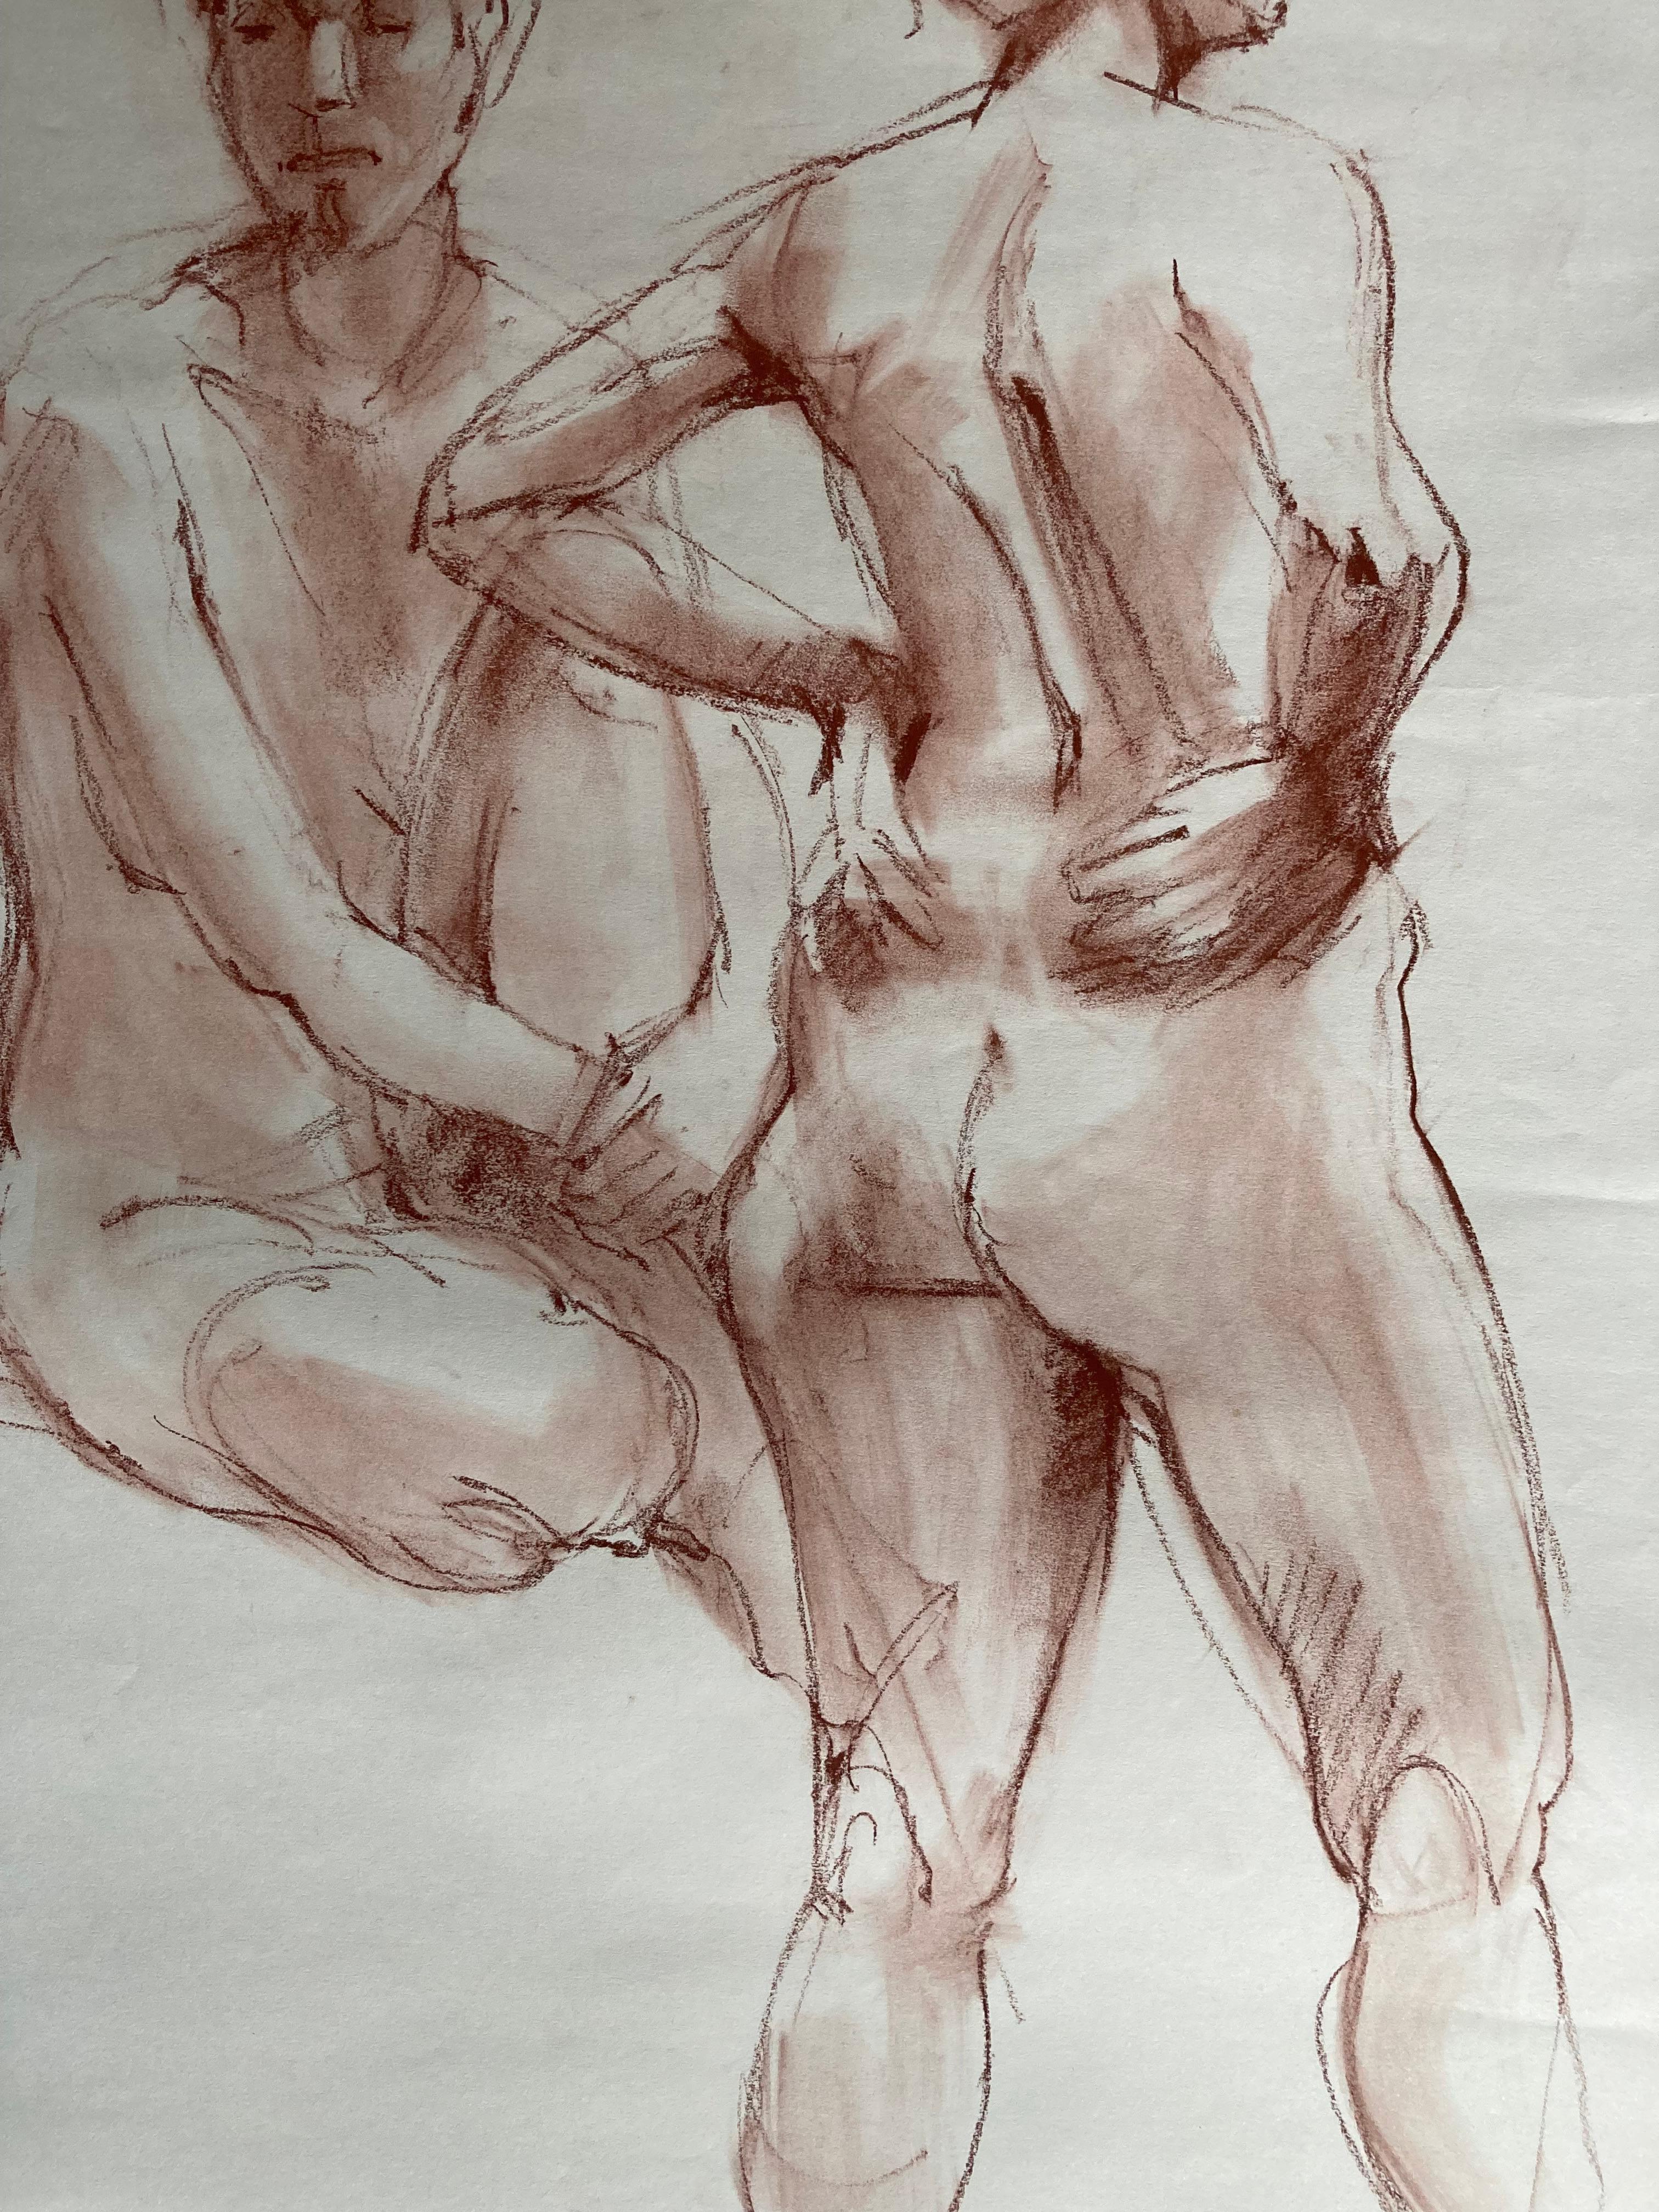 Deux femmes (dessin figuratif féminin contemporain d'un nu) - Académique Art par Lue Isaac